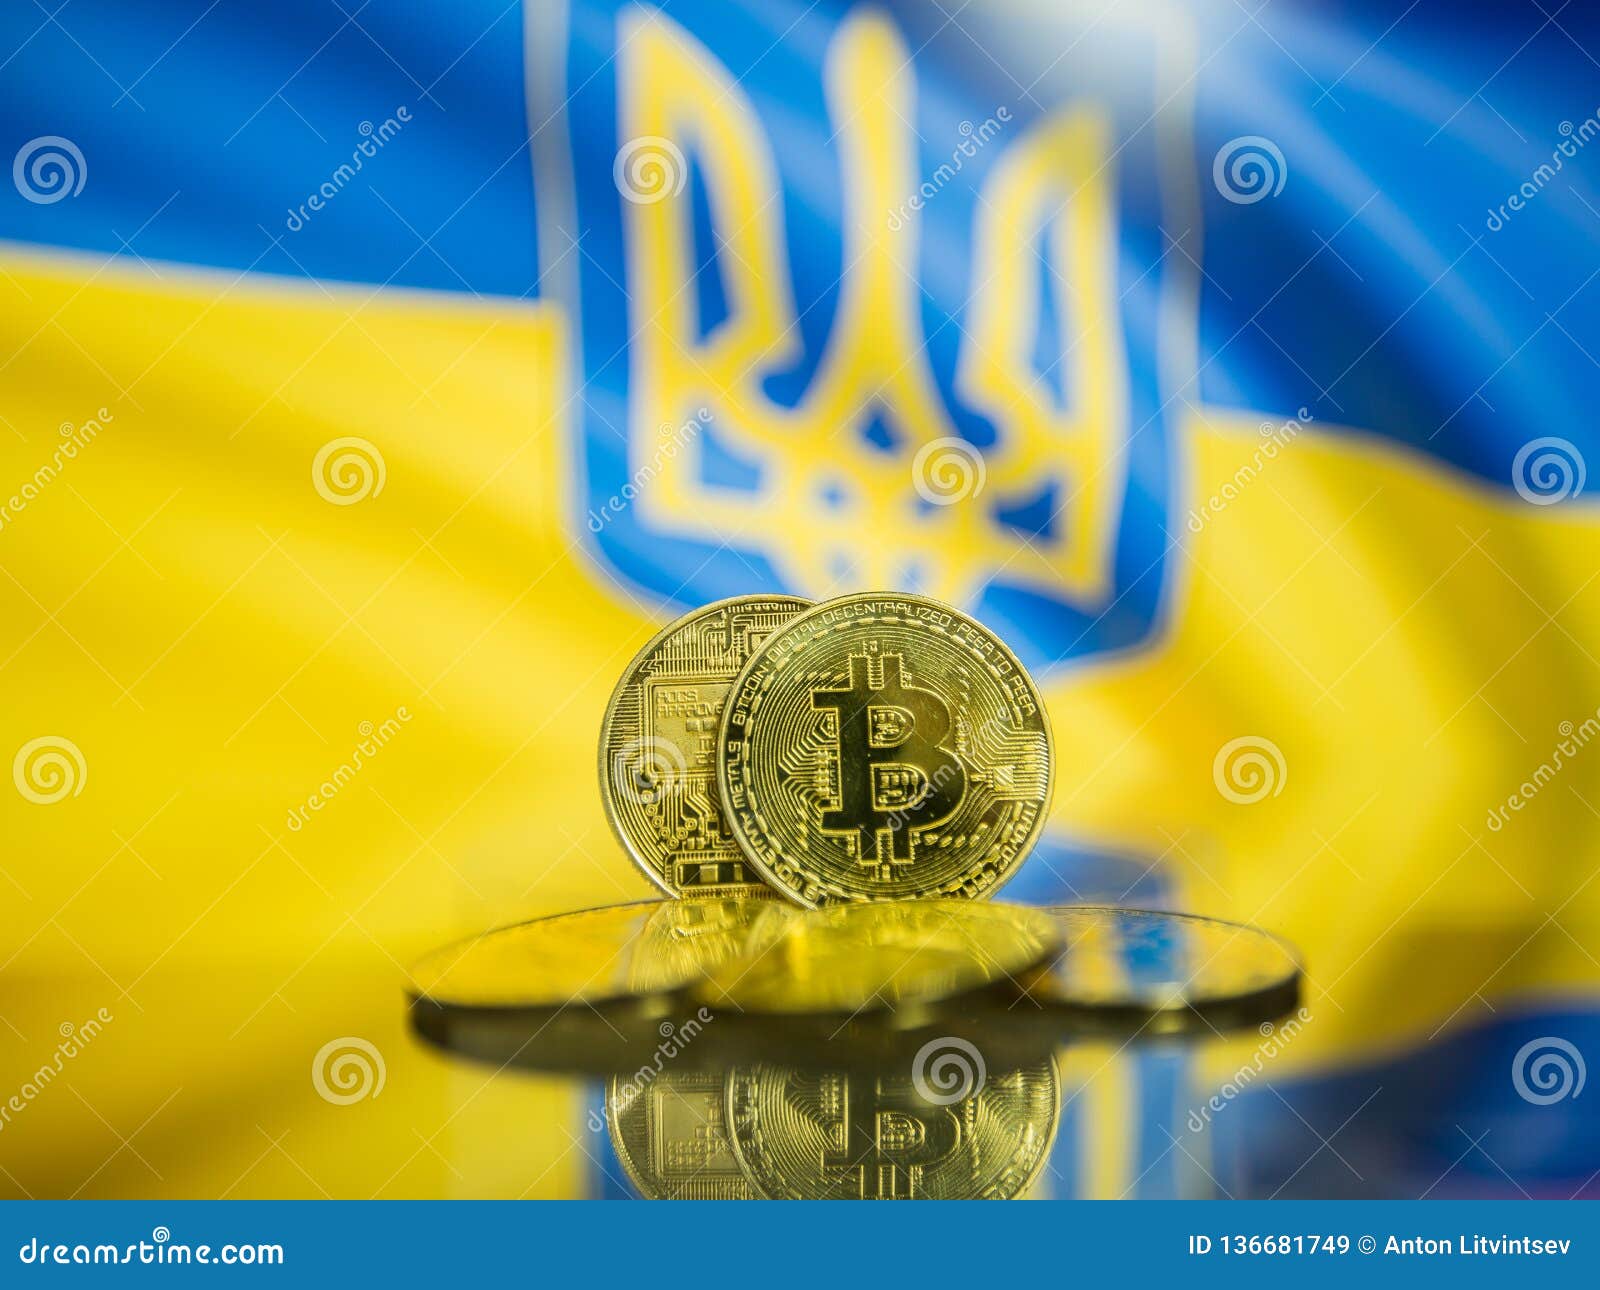 Ukraine Currency Chart